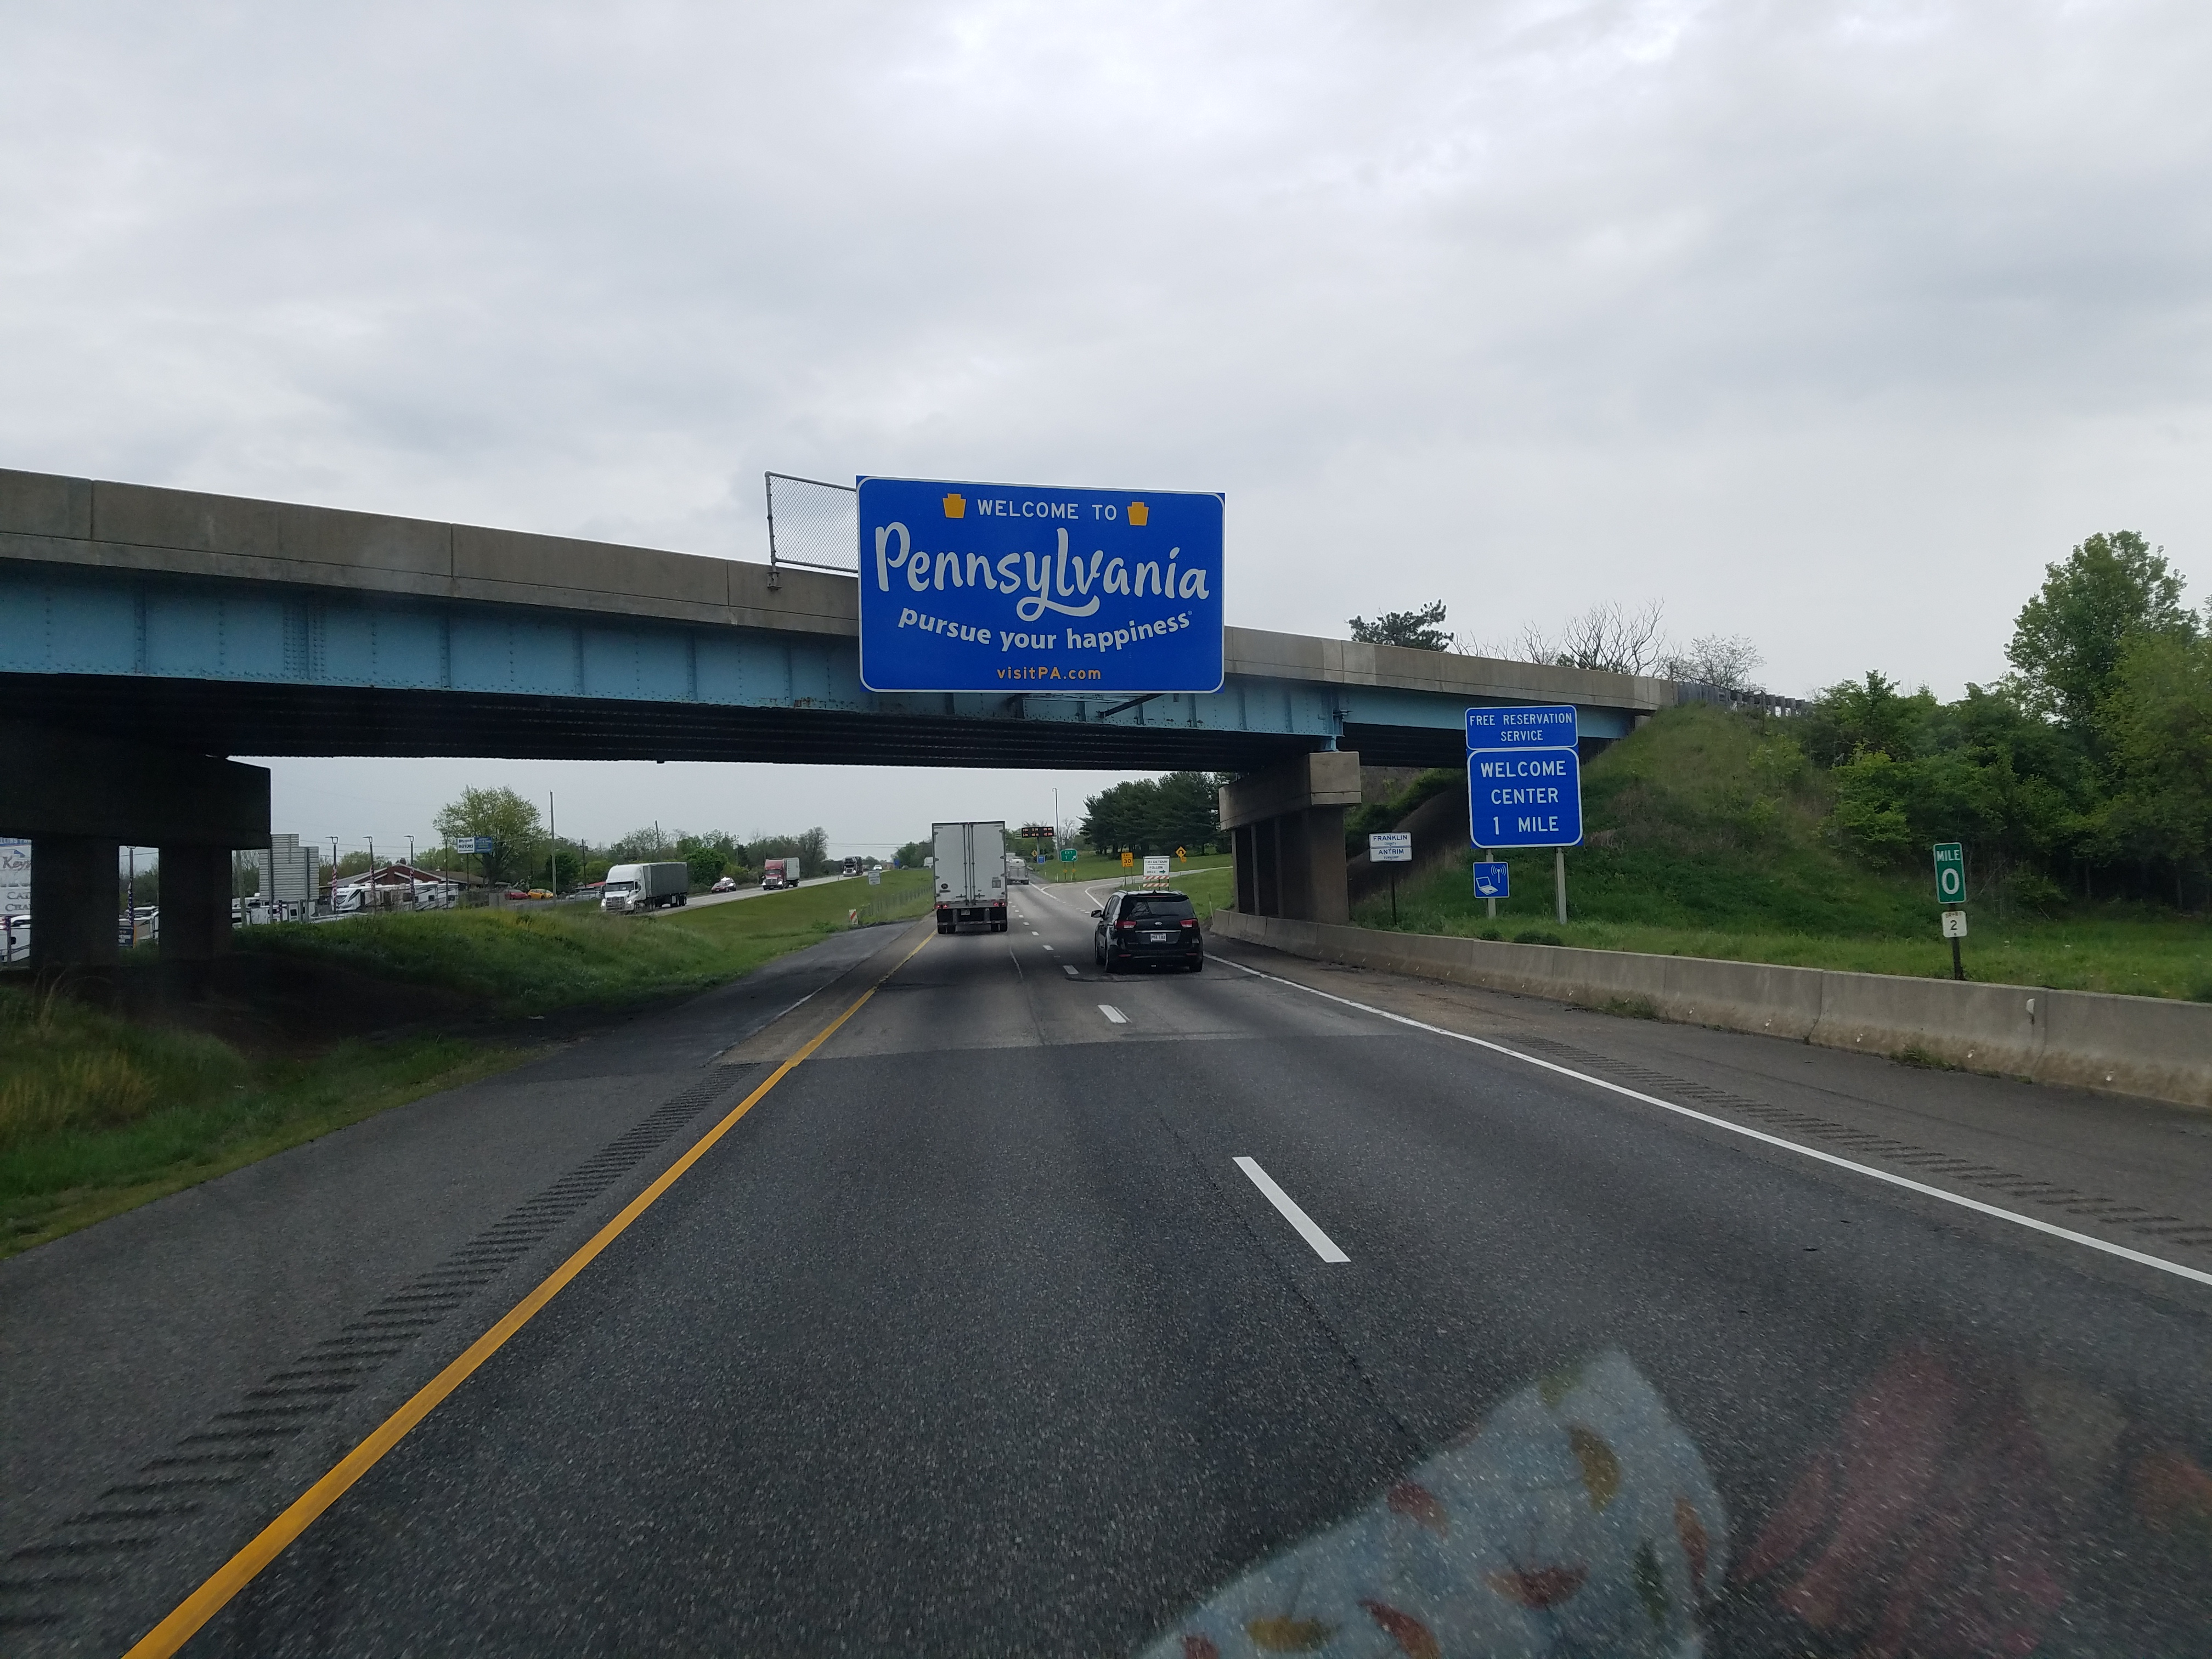 State border sign for Pennsylvania